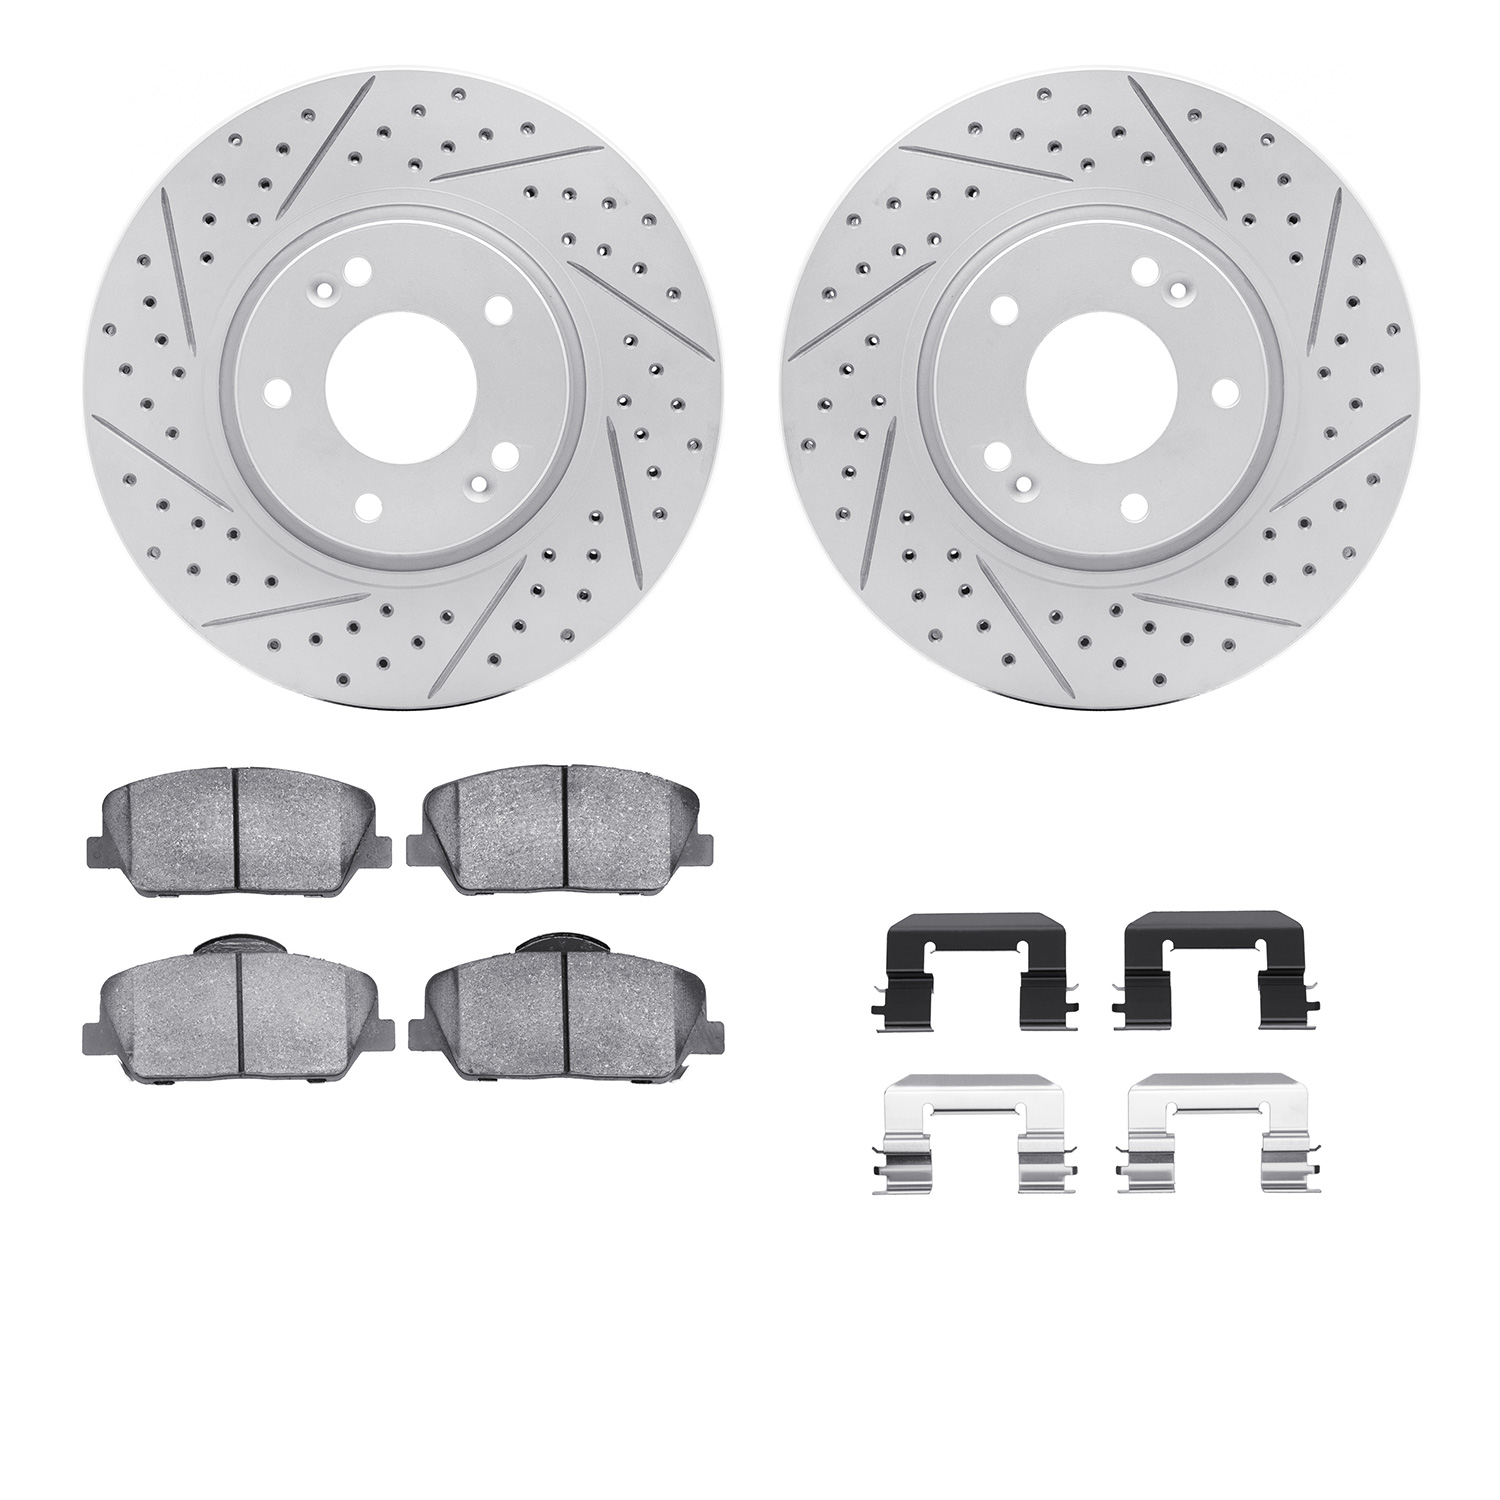 2512-03021 Geoperformance Drilled/Slotted Rotors w/5000 Advanced Brake Pads Kit & Hardware, 2013-2015 Kia/Hyundai/Genesis, Posit